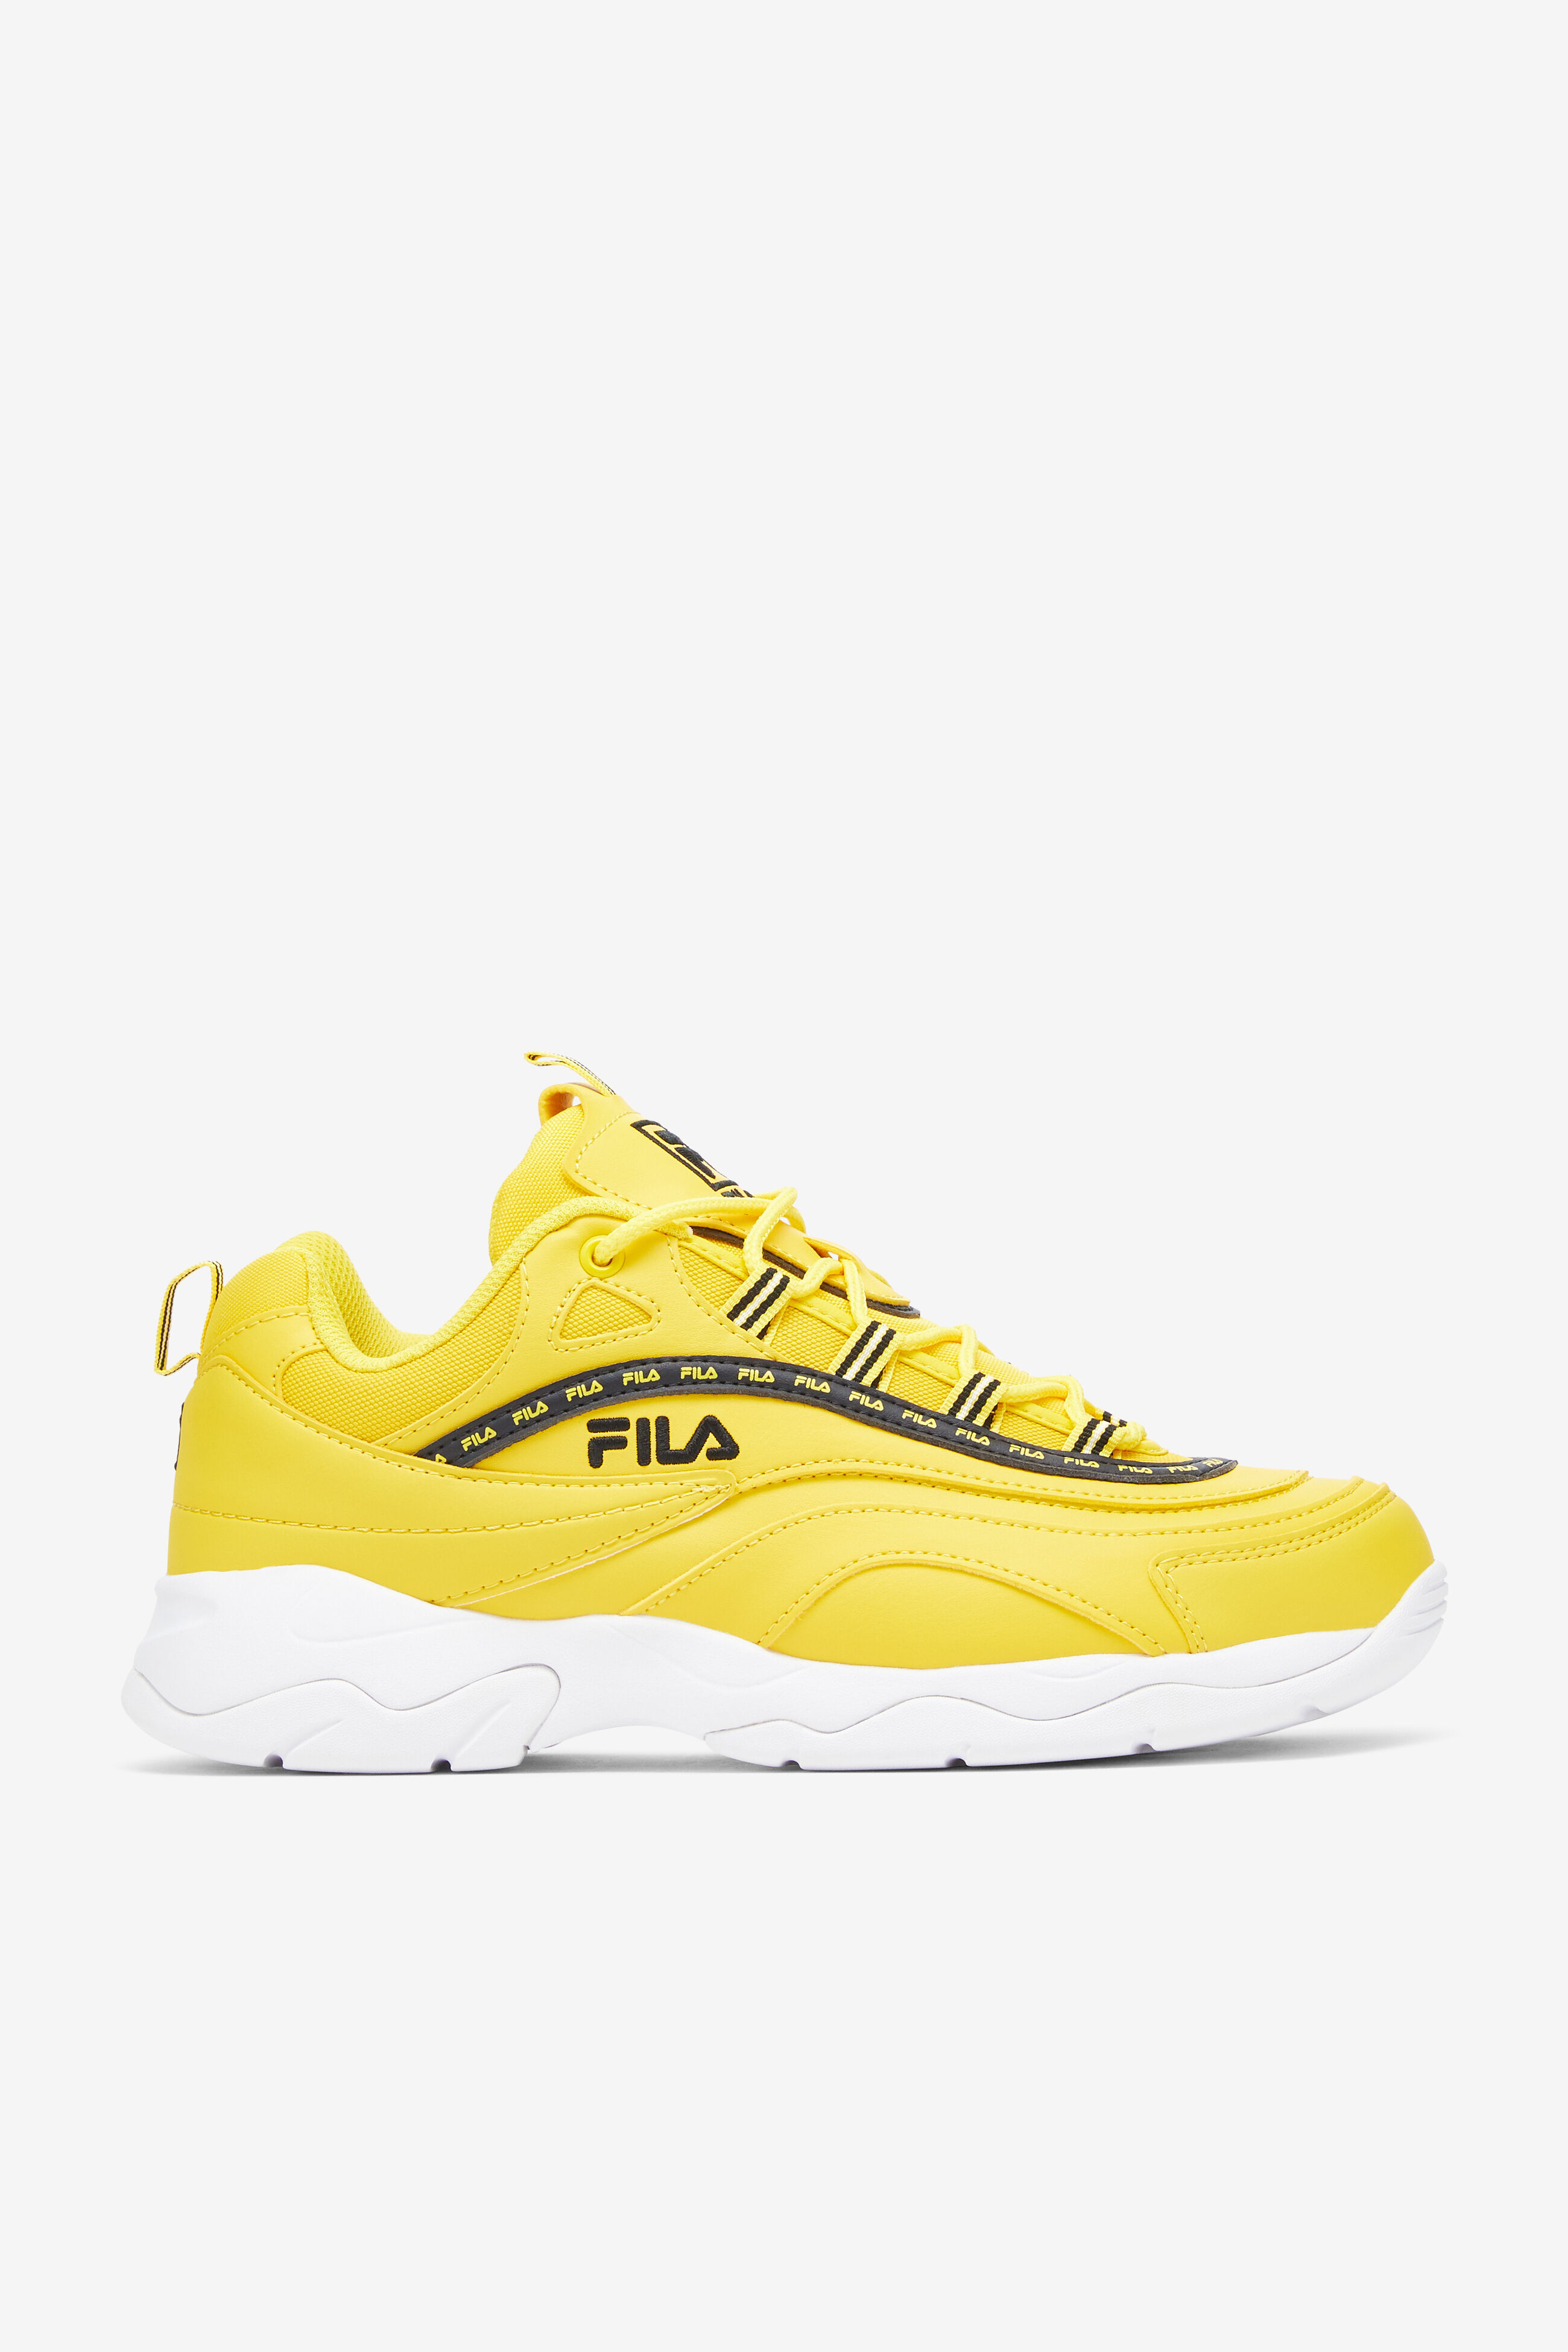 Fila Shoes For Men Yellow Hot Sale | bellvalefarms.com